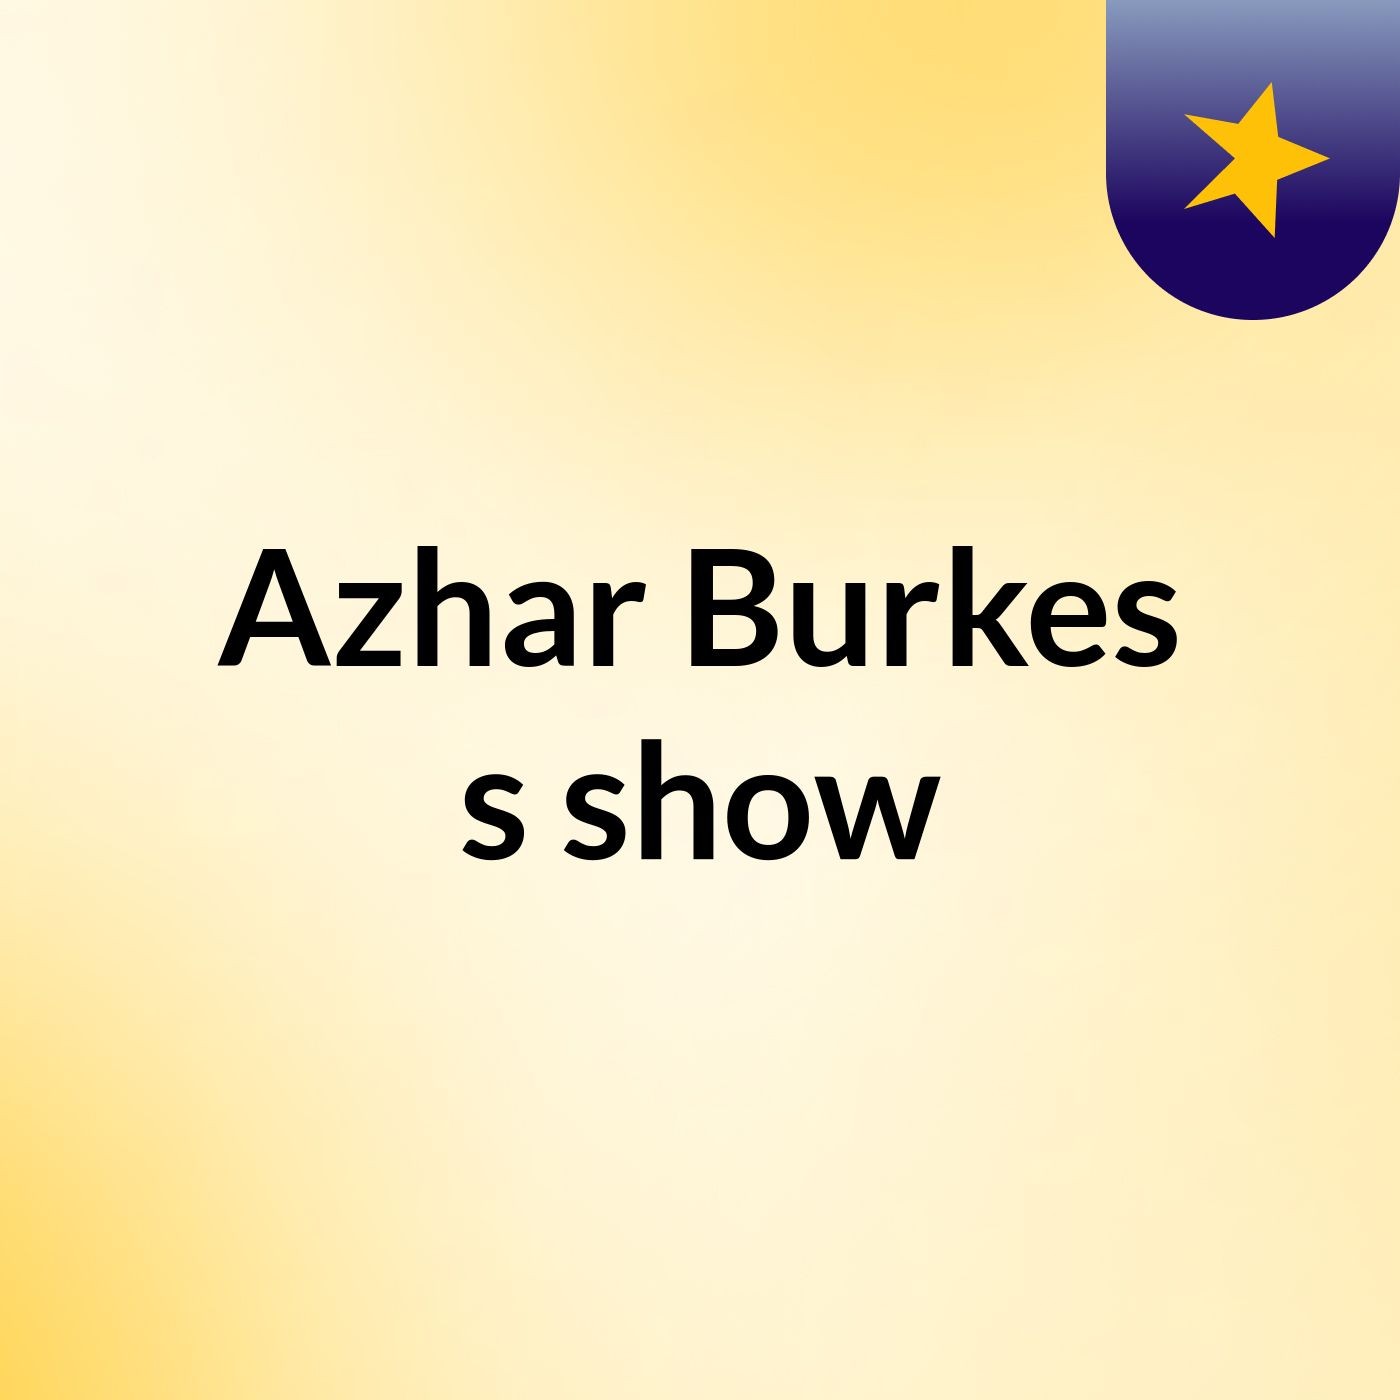 Azhar Burkes's show